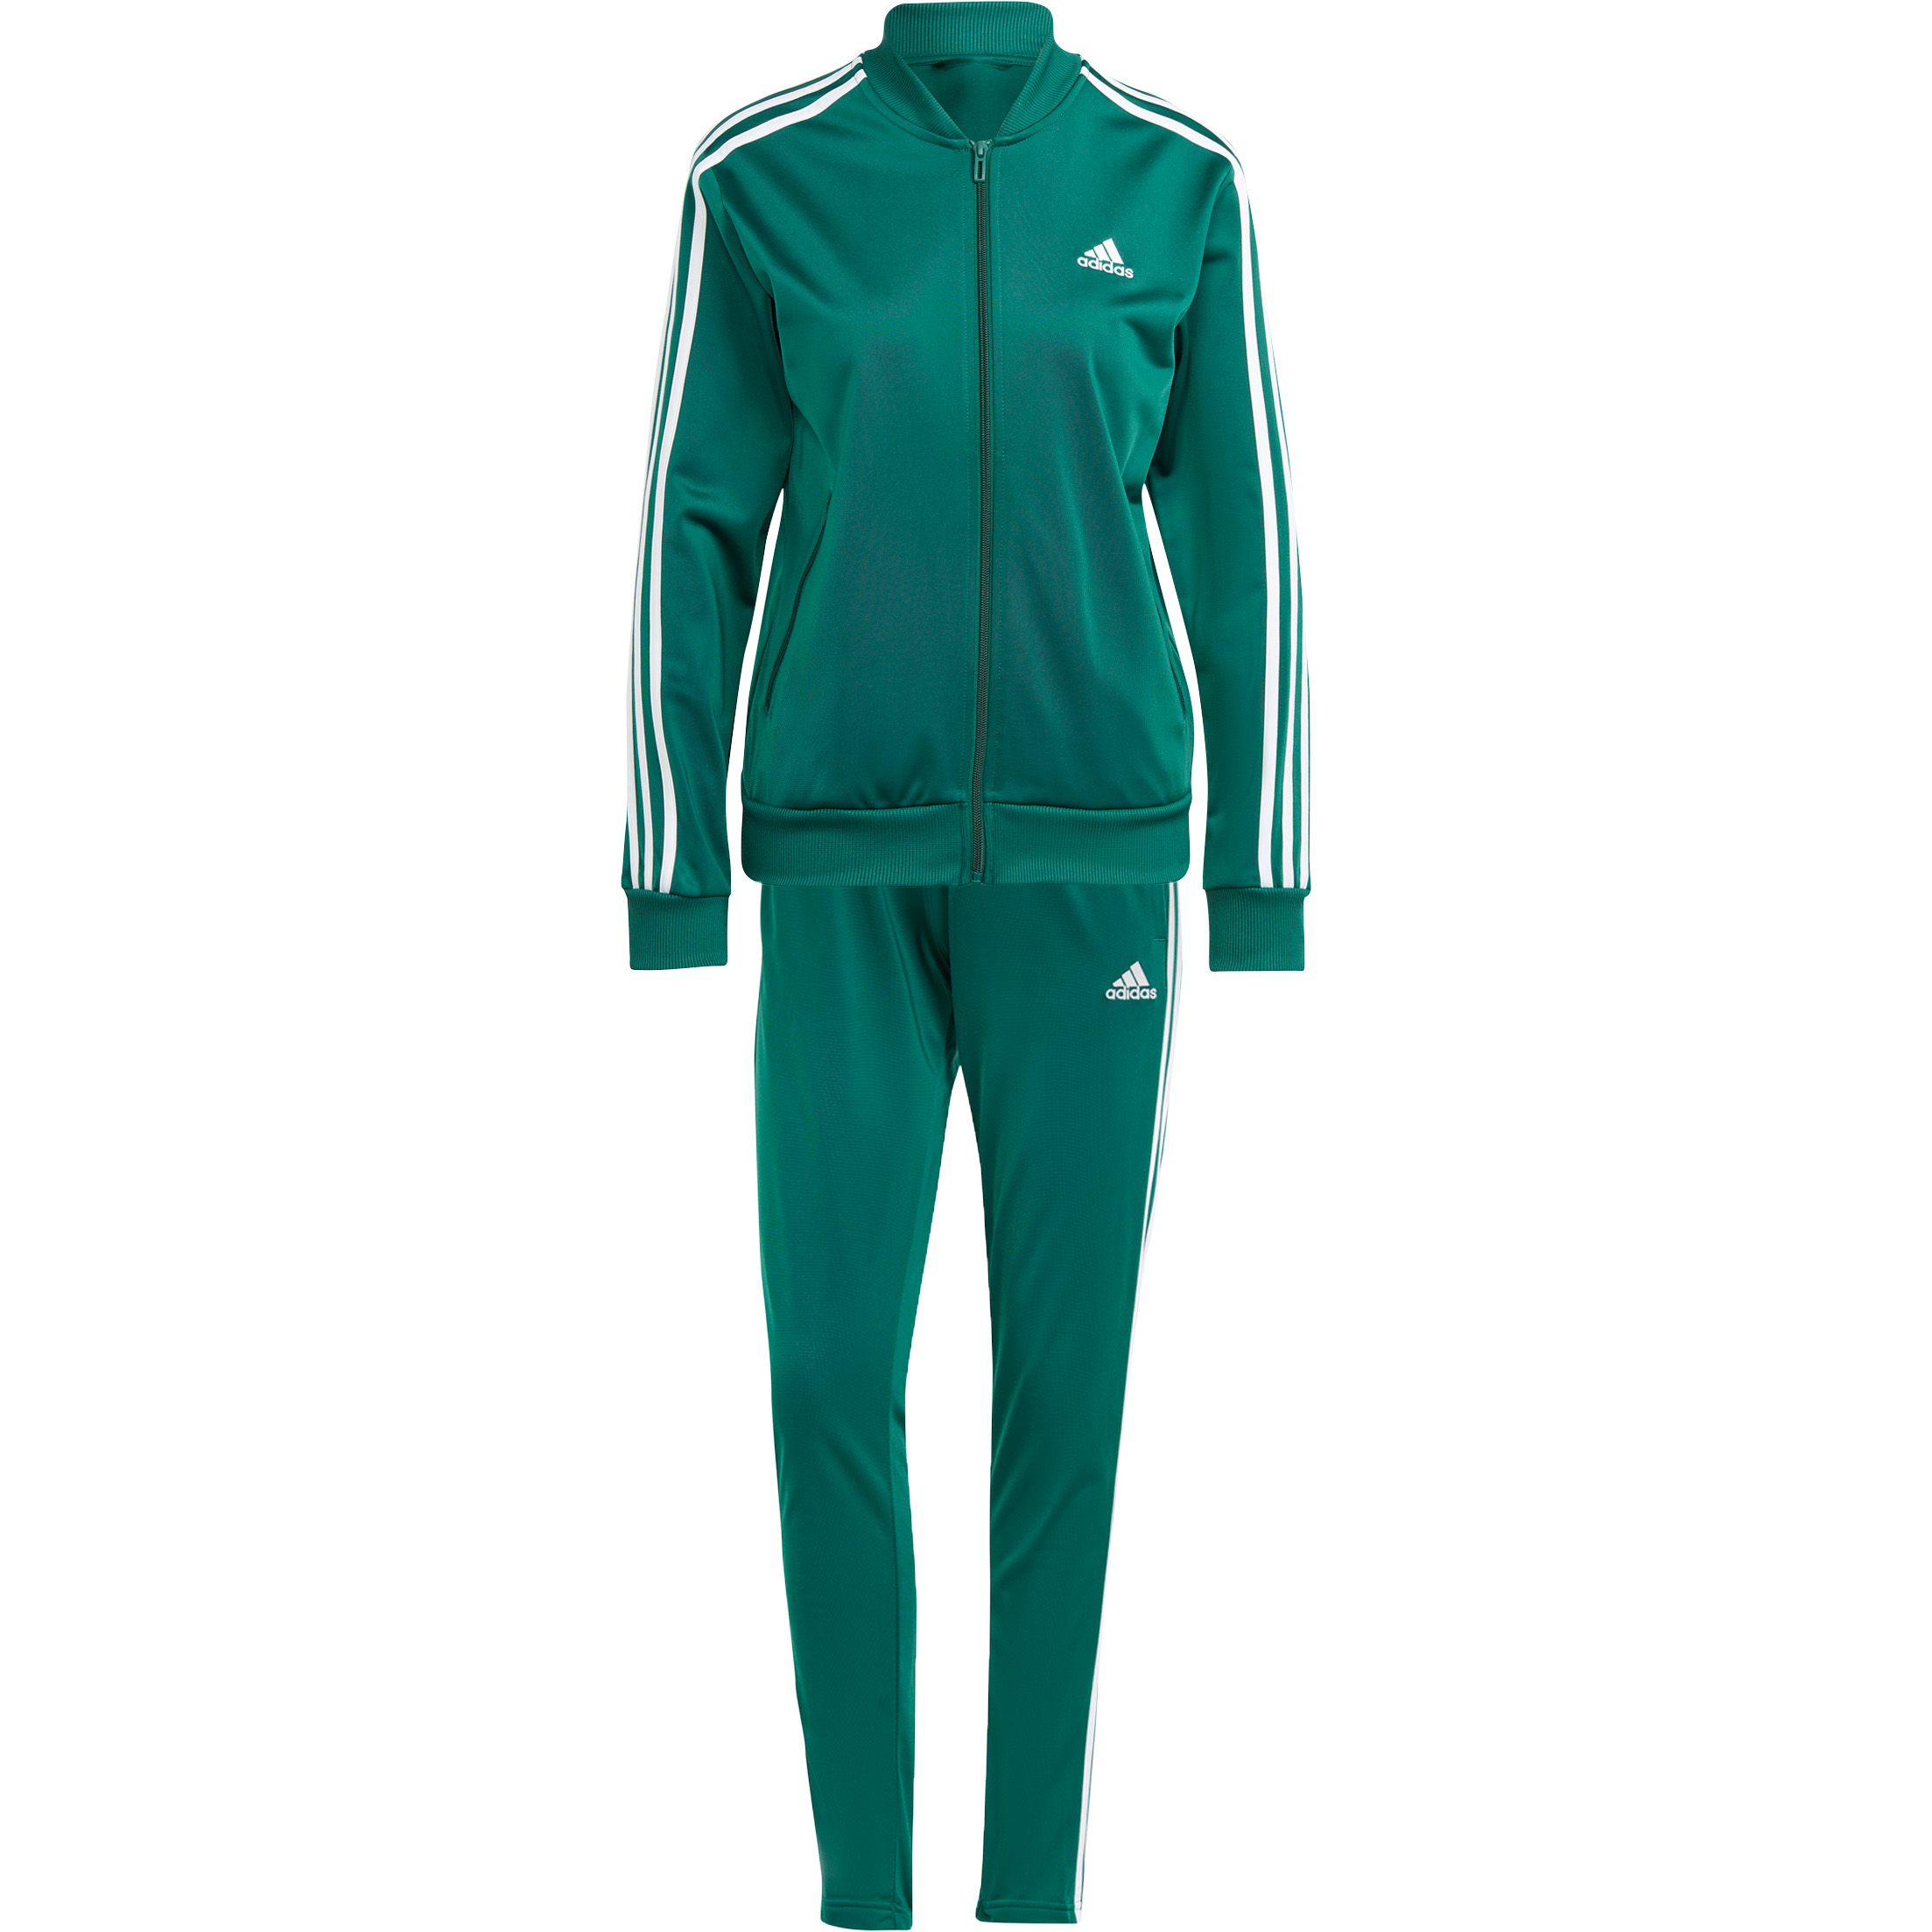 bed in verlegenheid gebracht Gom Adidas Essentials 3-Stripes trainingspak dames collegiate green white